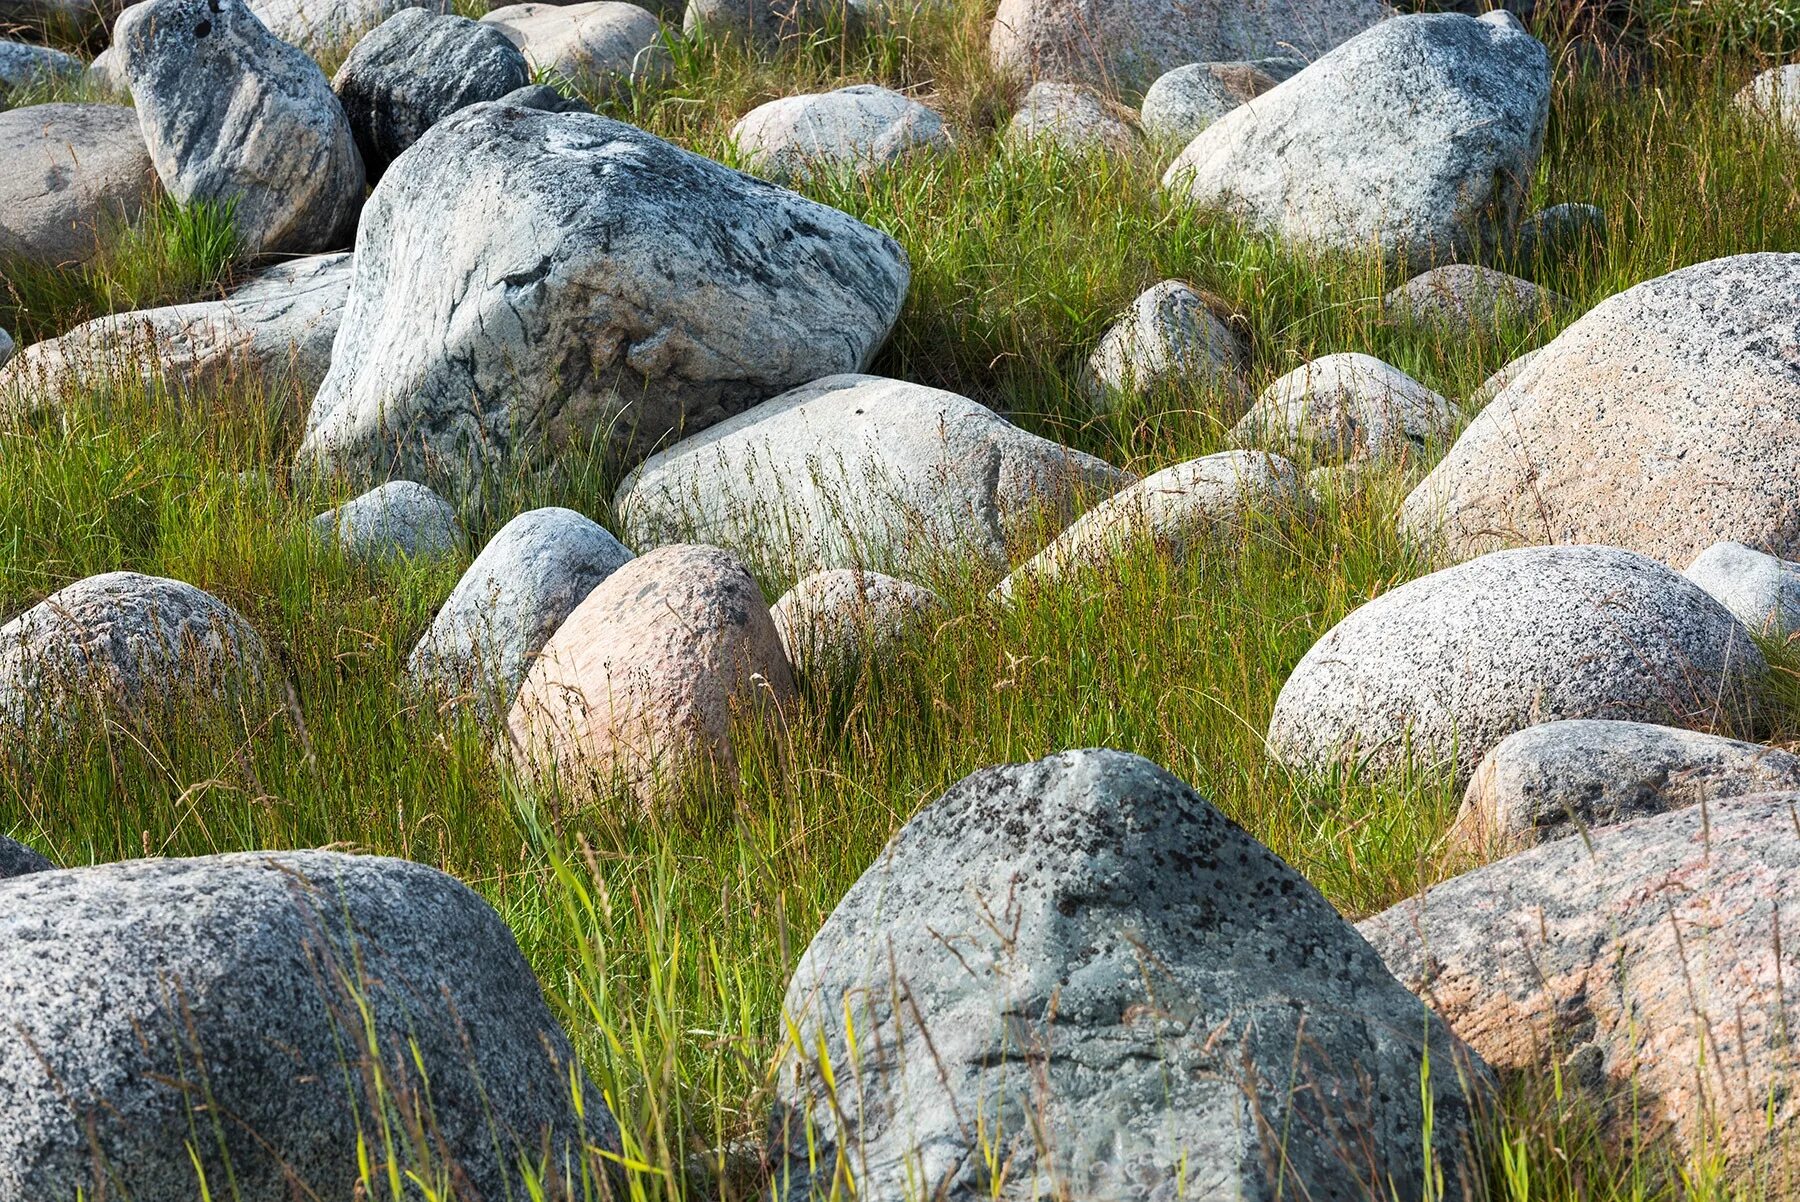 Stone photo. Валуны. Камень валун. Камни в траве. Камень булыжник.